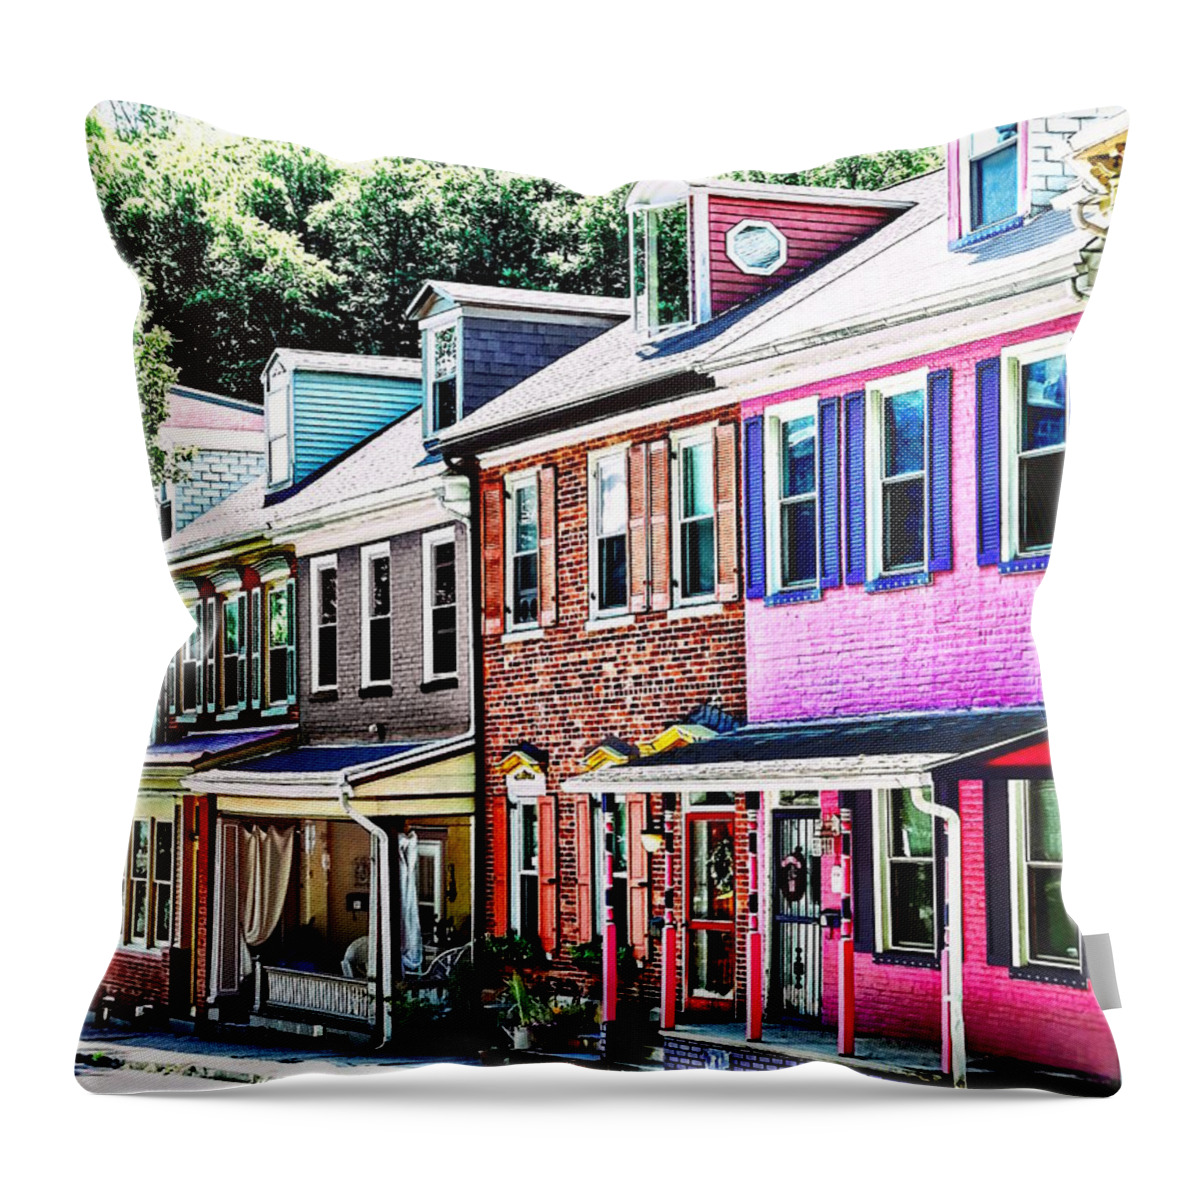 Jim Thorpe Throw Pillow featuring the photograph Jim Thorpe PA - Colorful Street by Susan Savad